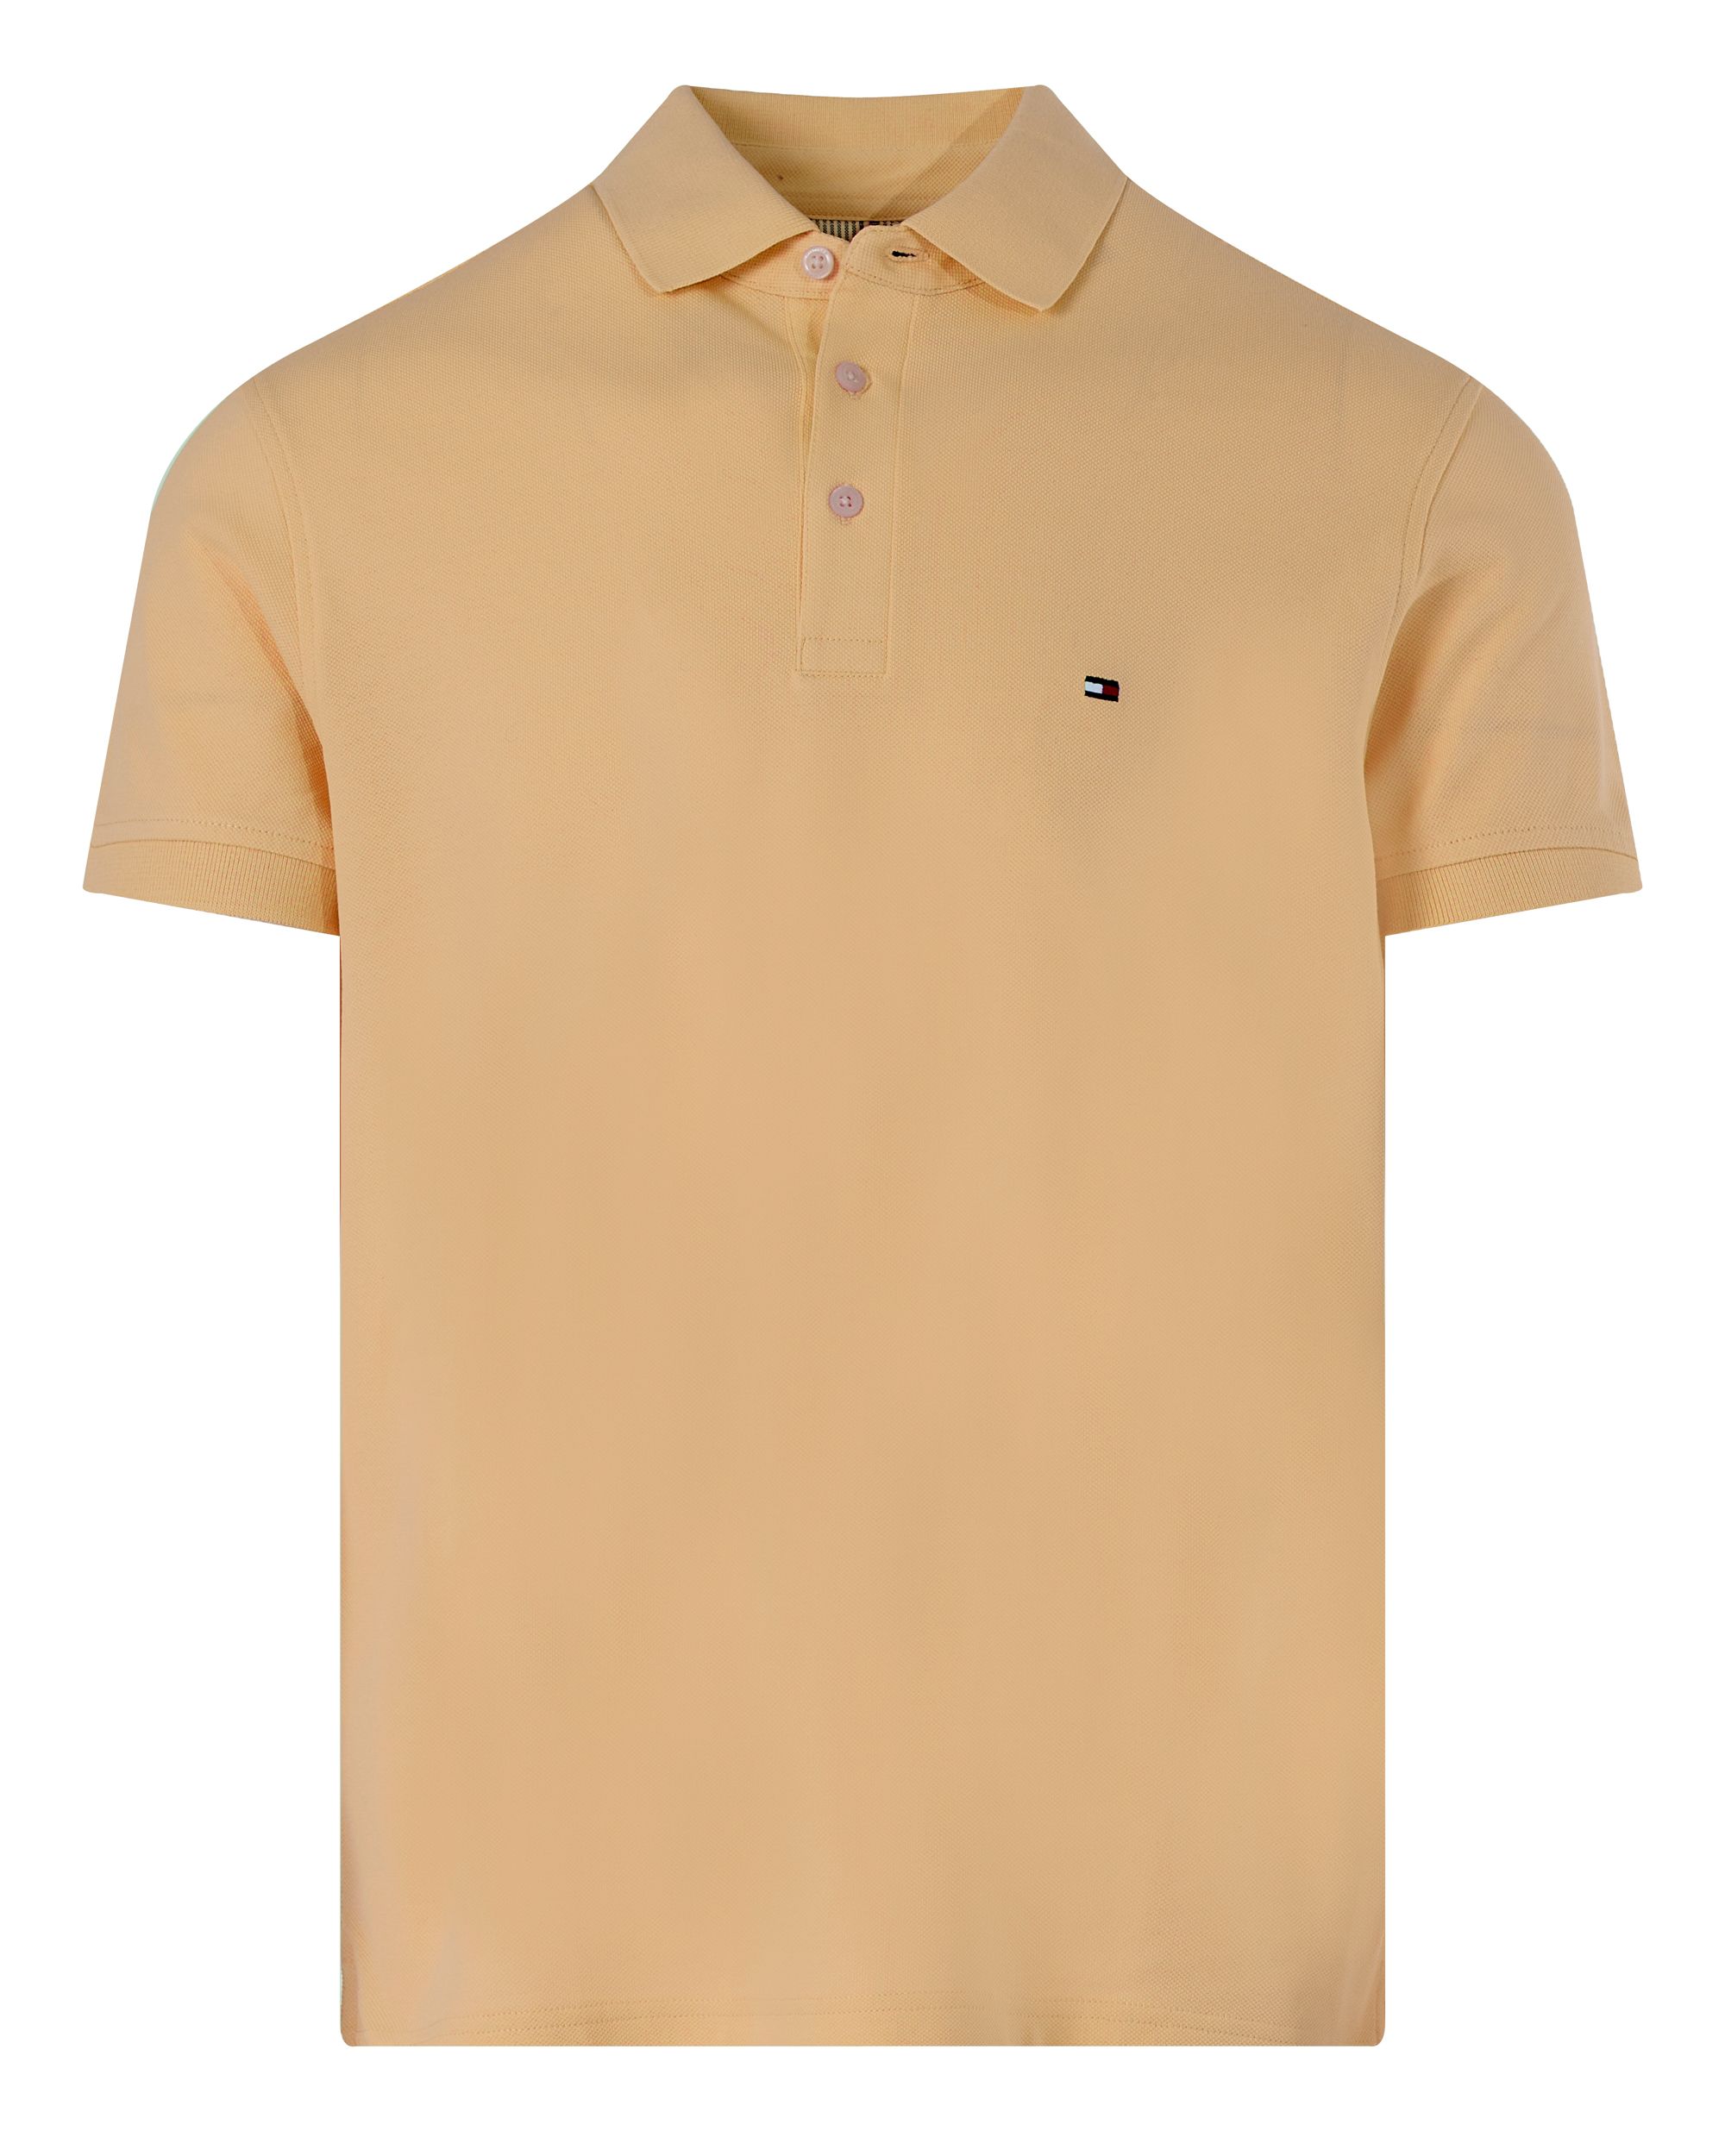 Tommy Hilfiger Menswear Polo KM Oranje 094653-001-L